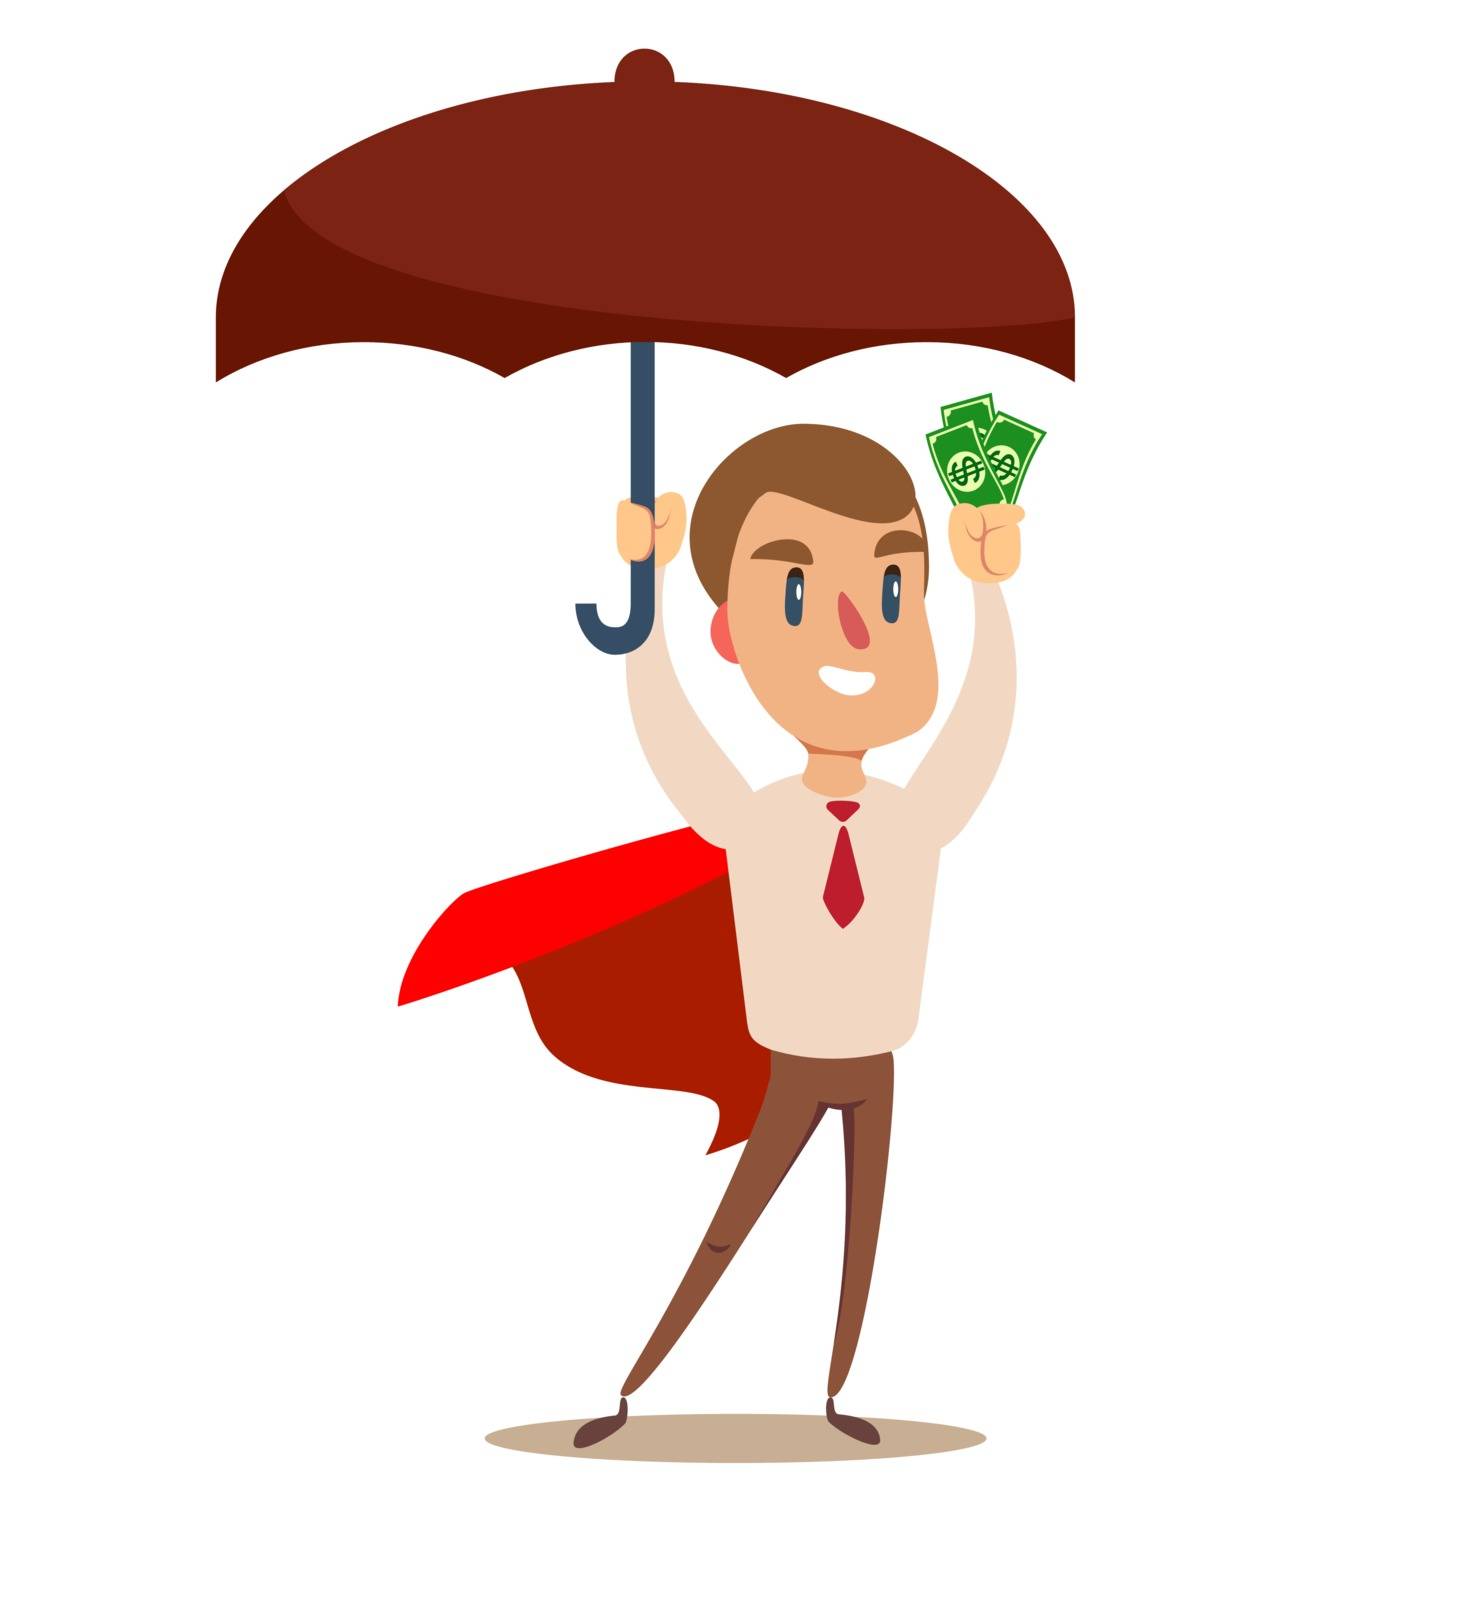 Superhero holding umbrella to protect money. Vector illustration for financial, insurance savings concept